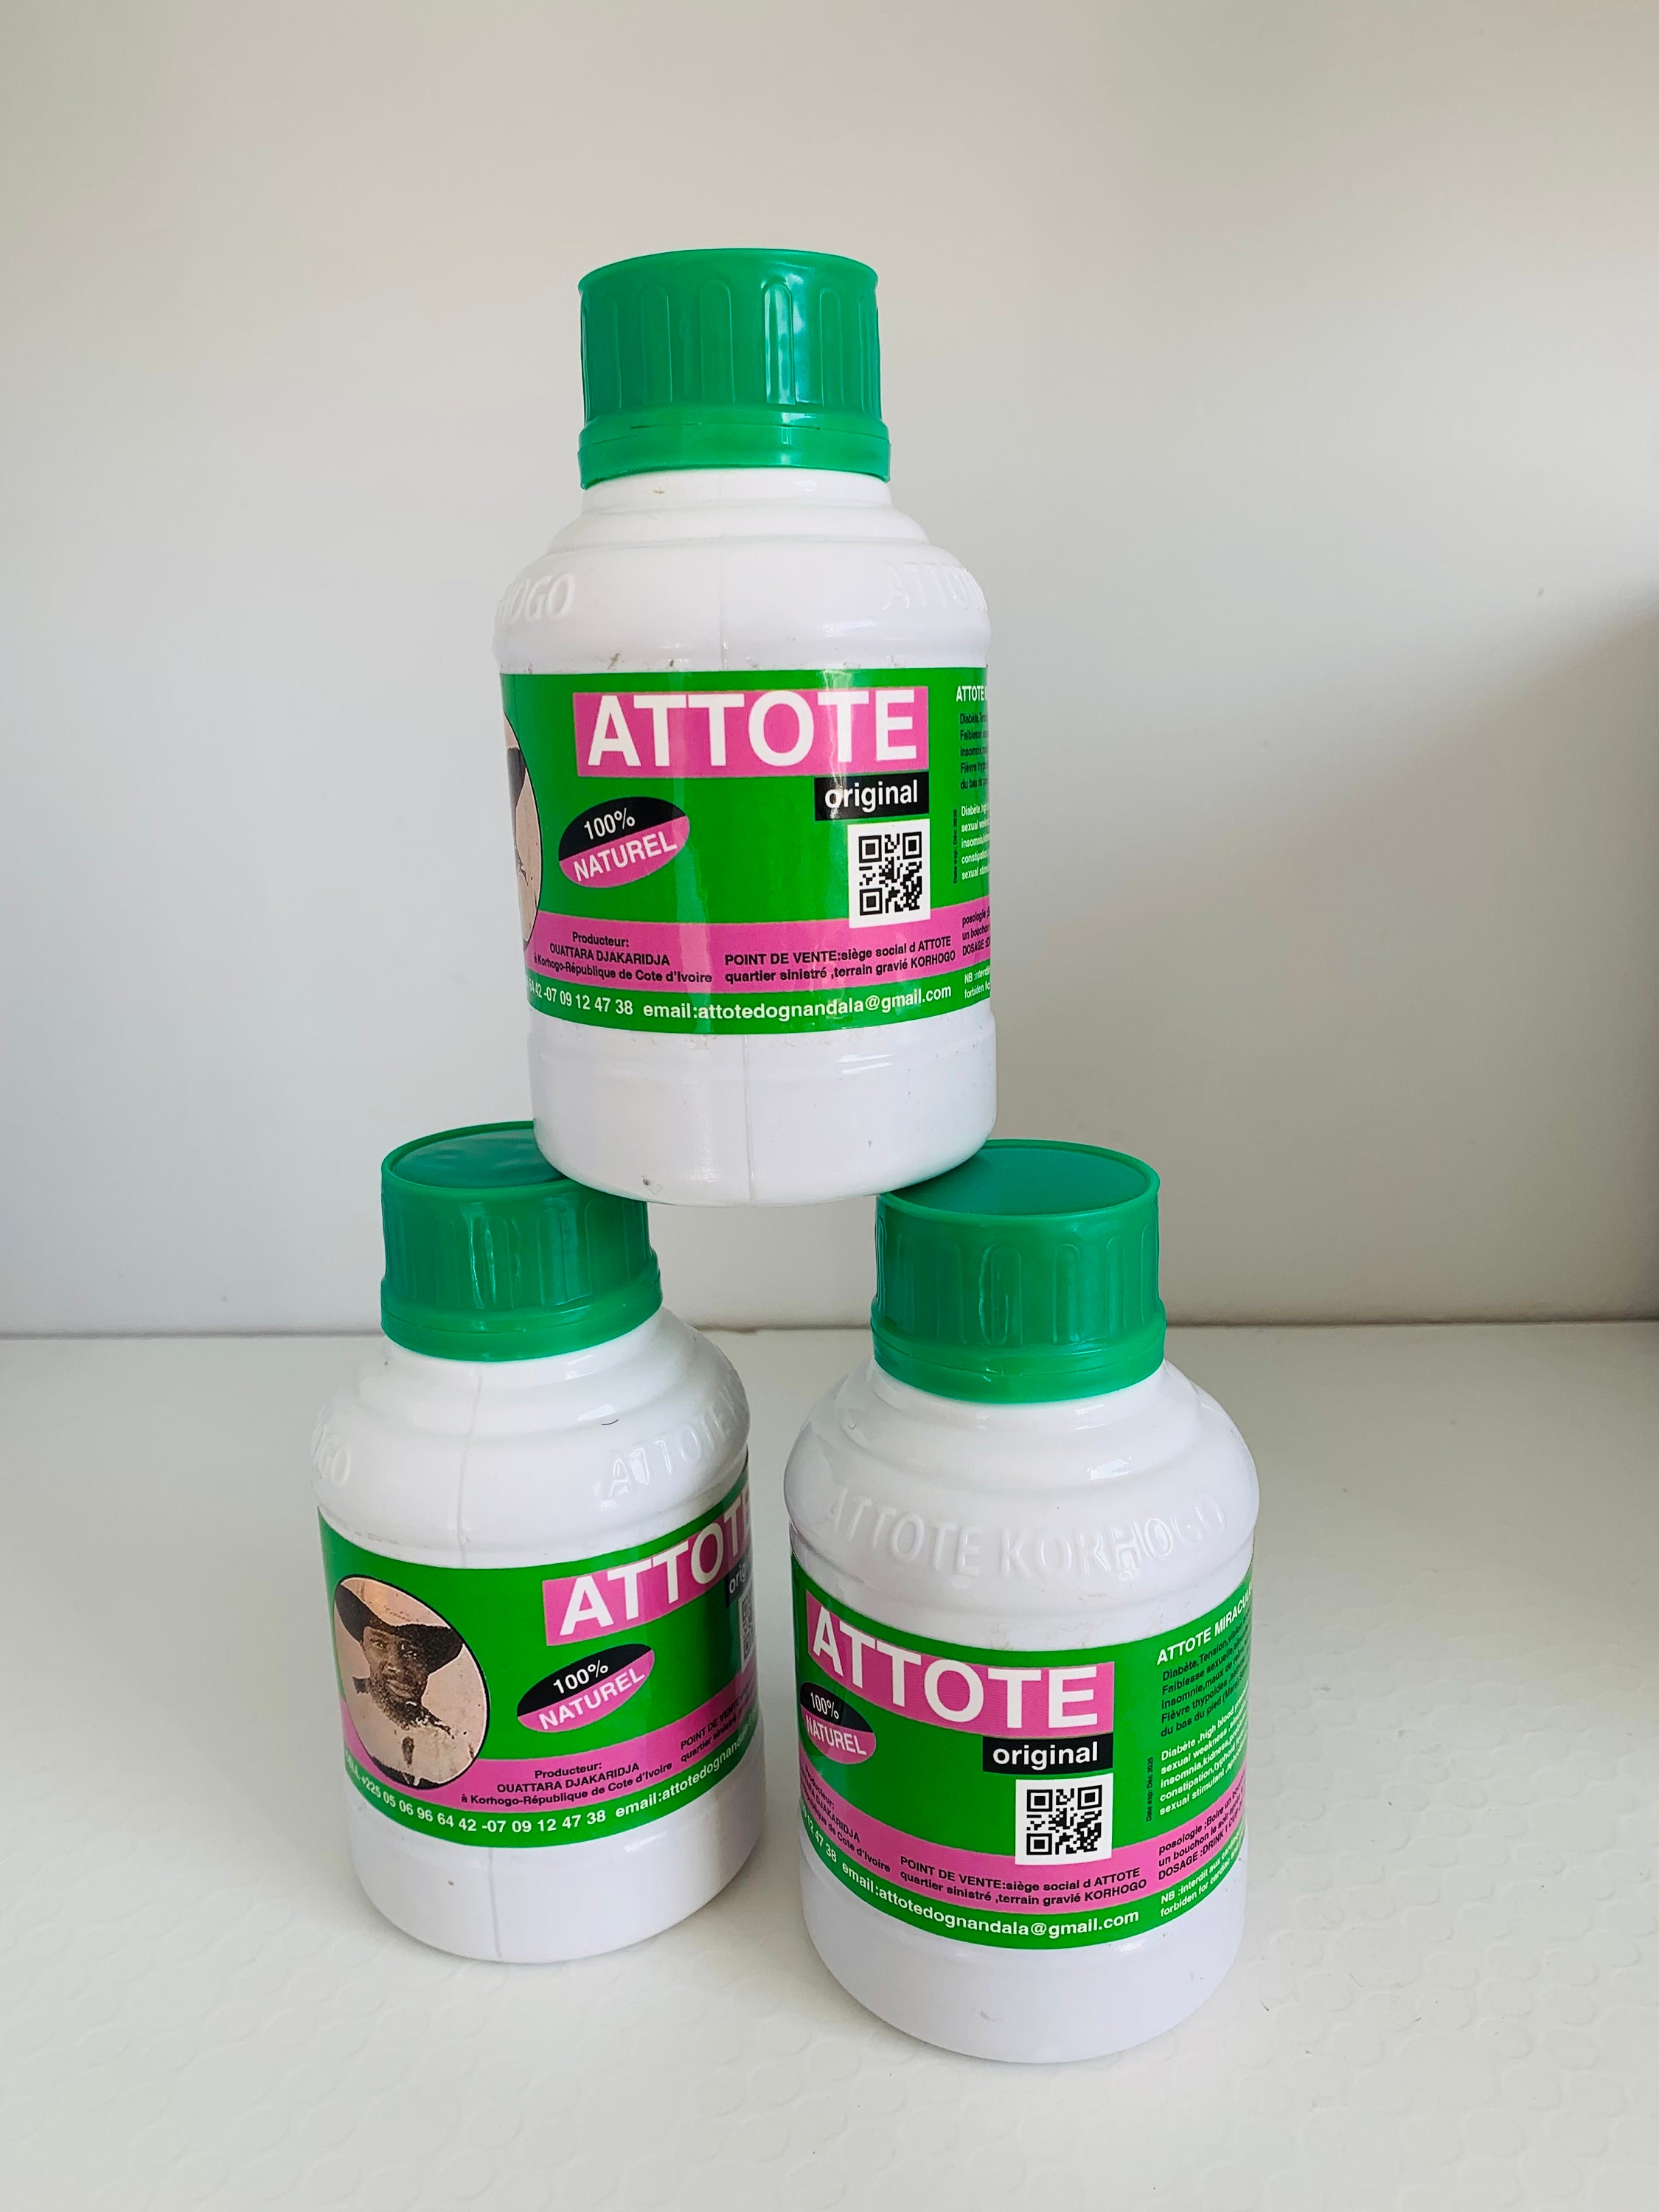 ATTOTE-Original Cote d'ivoire 225